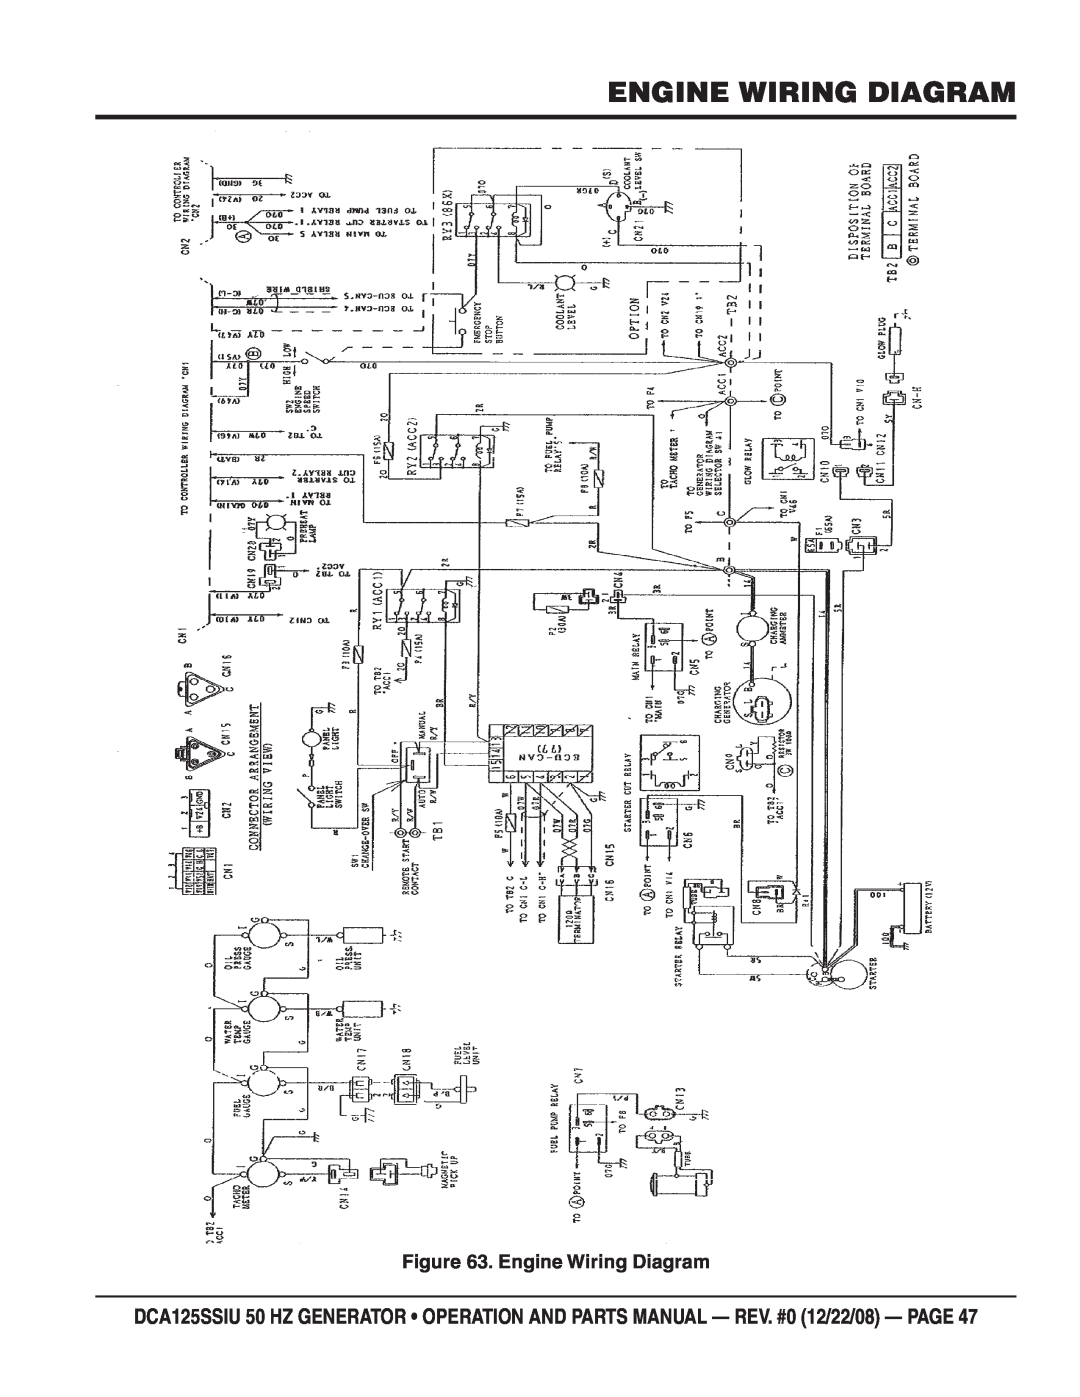 Multiquip DCA125SSIU manual Engine Wiring Diagram 